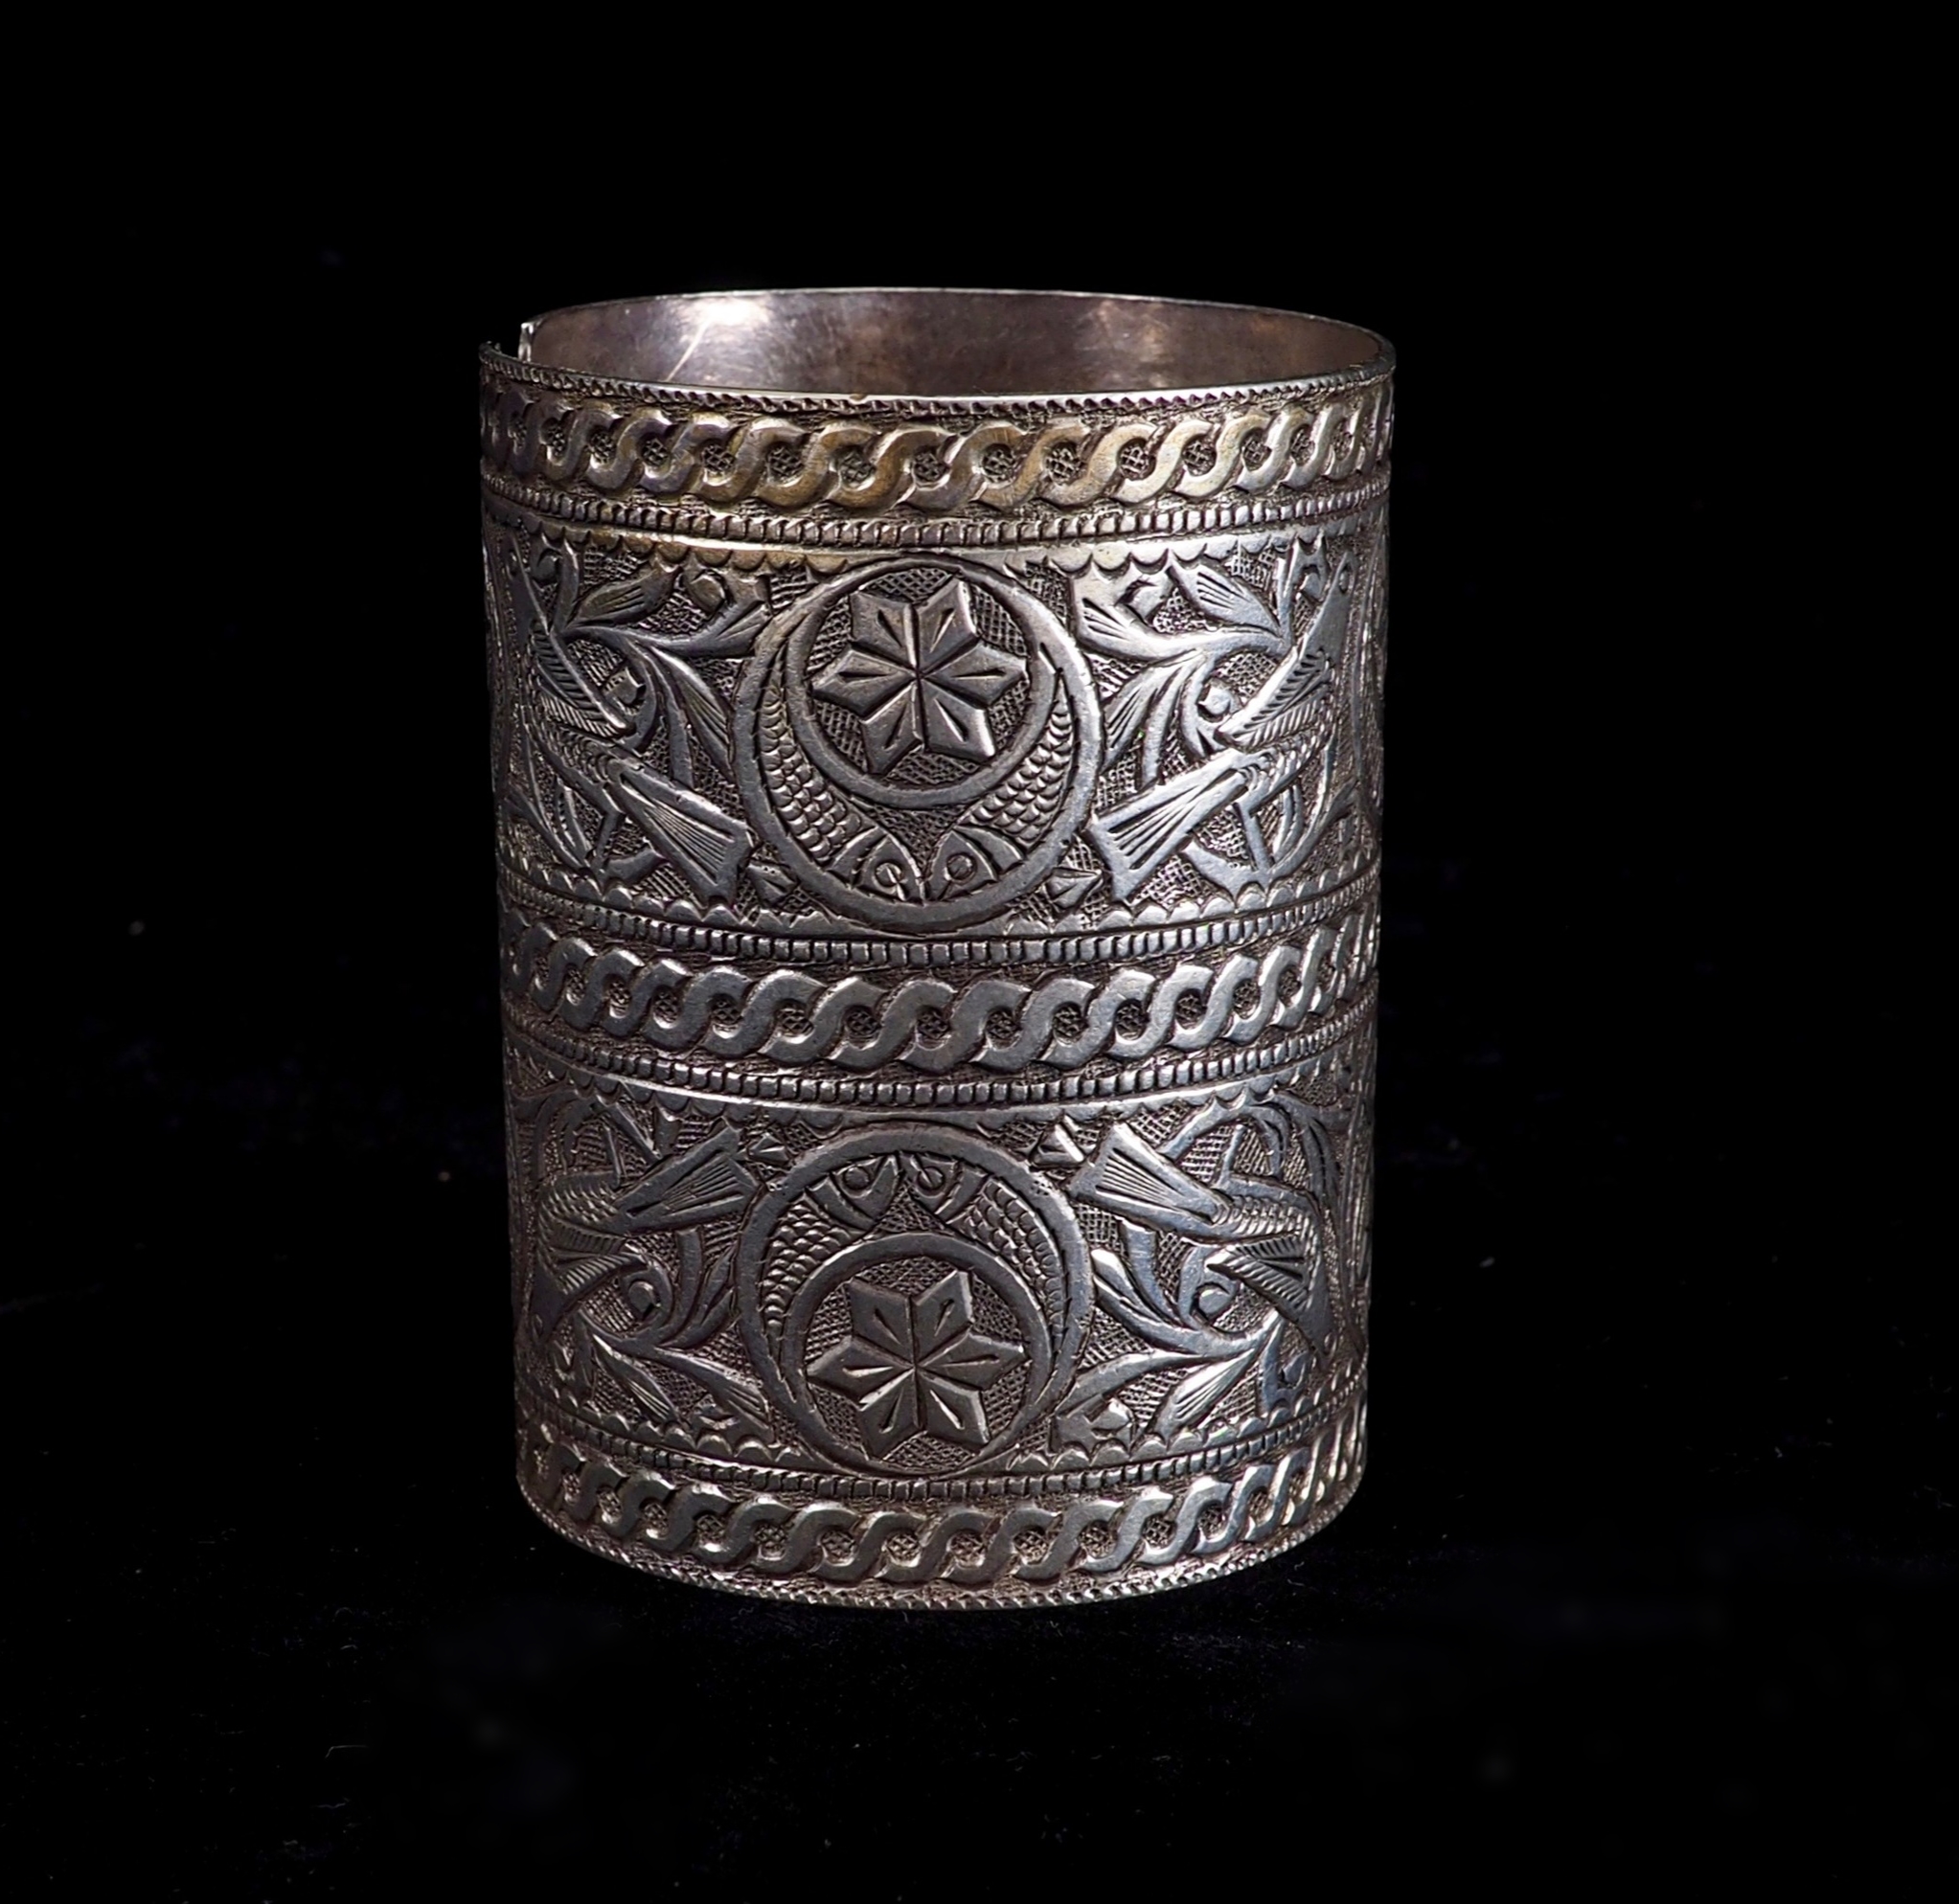 Tunisian masterly engraved silver bracelet. 350 € — Karlsson | Wickman